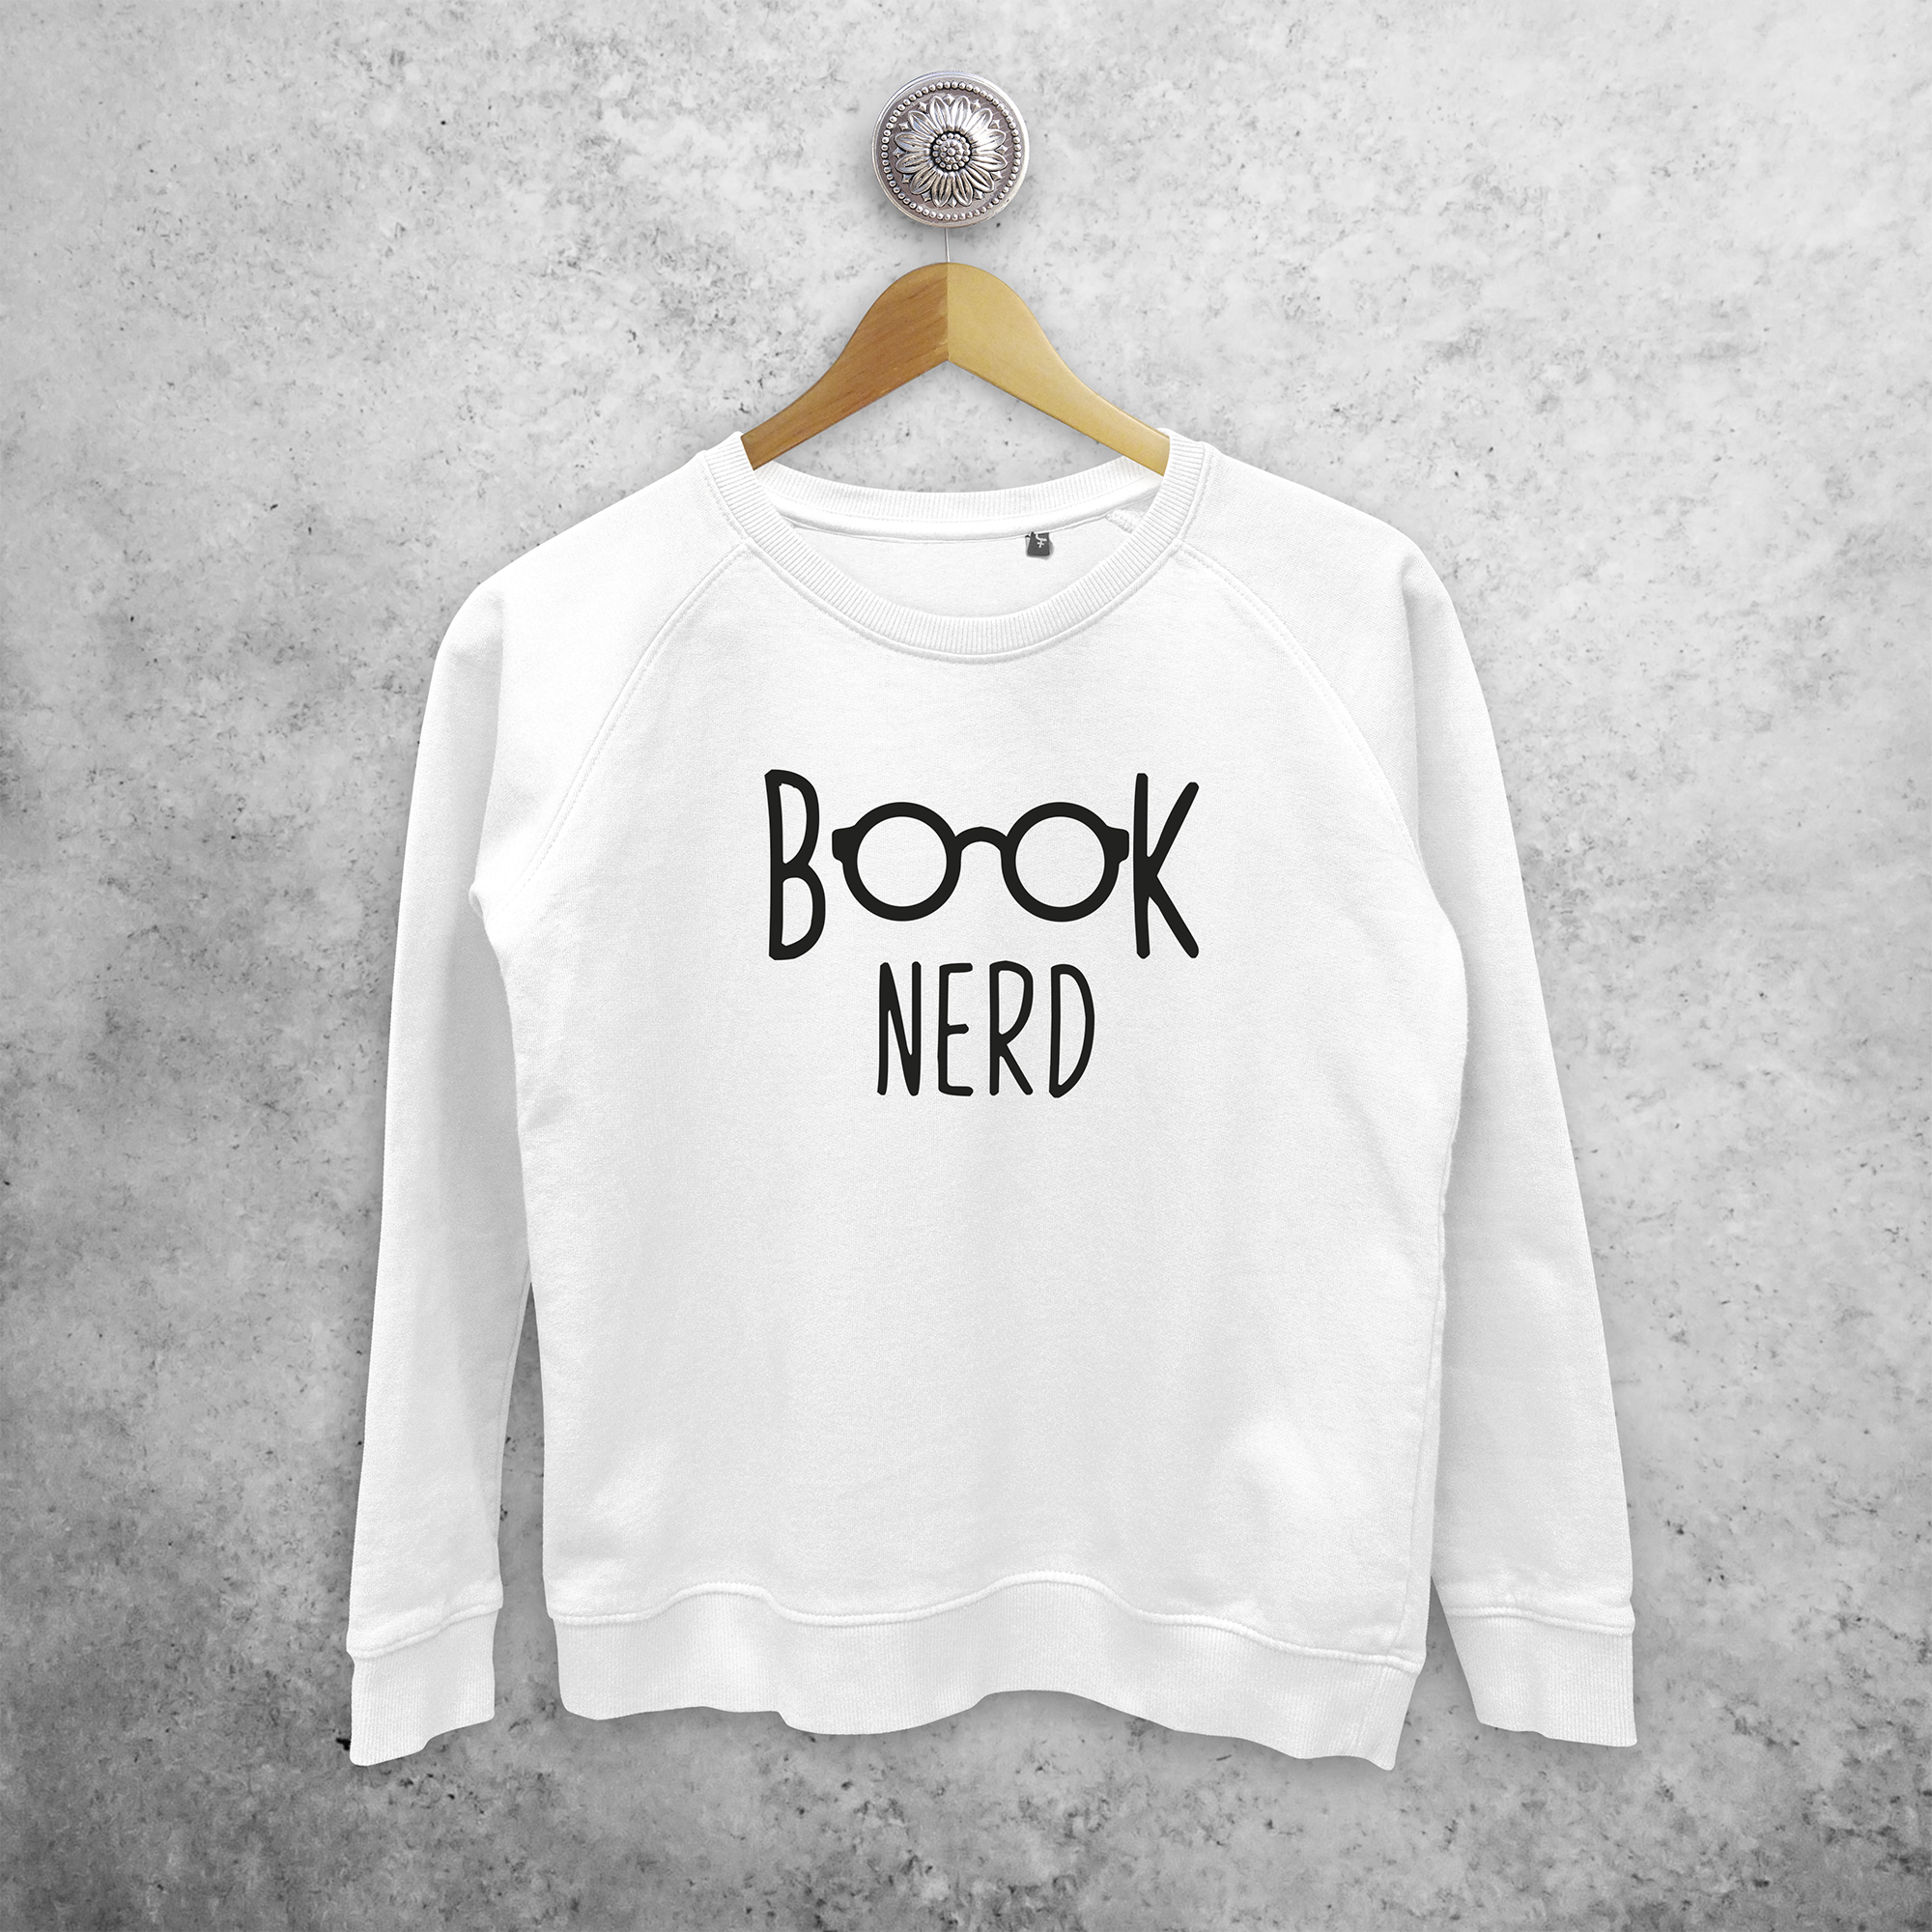 'Book nerd' sweater